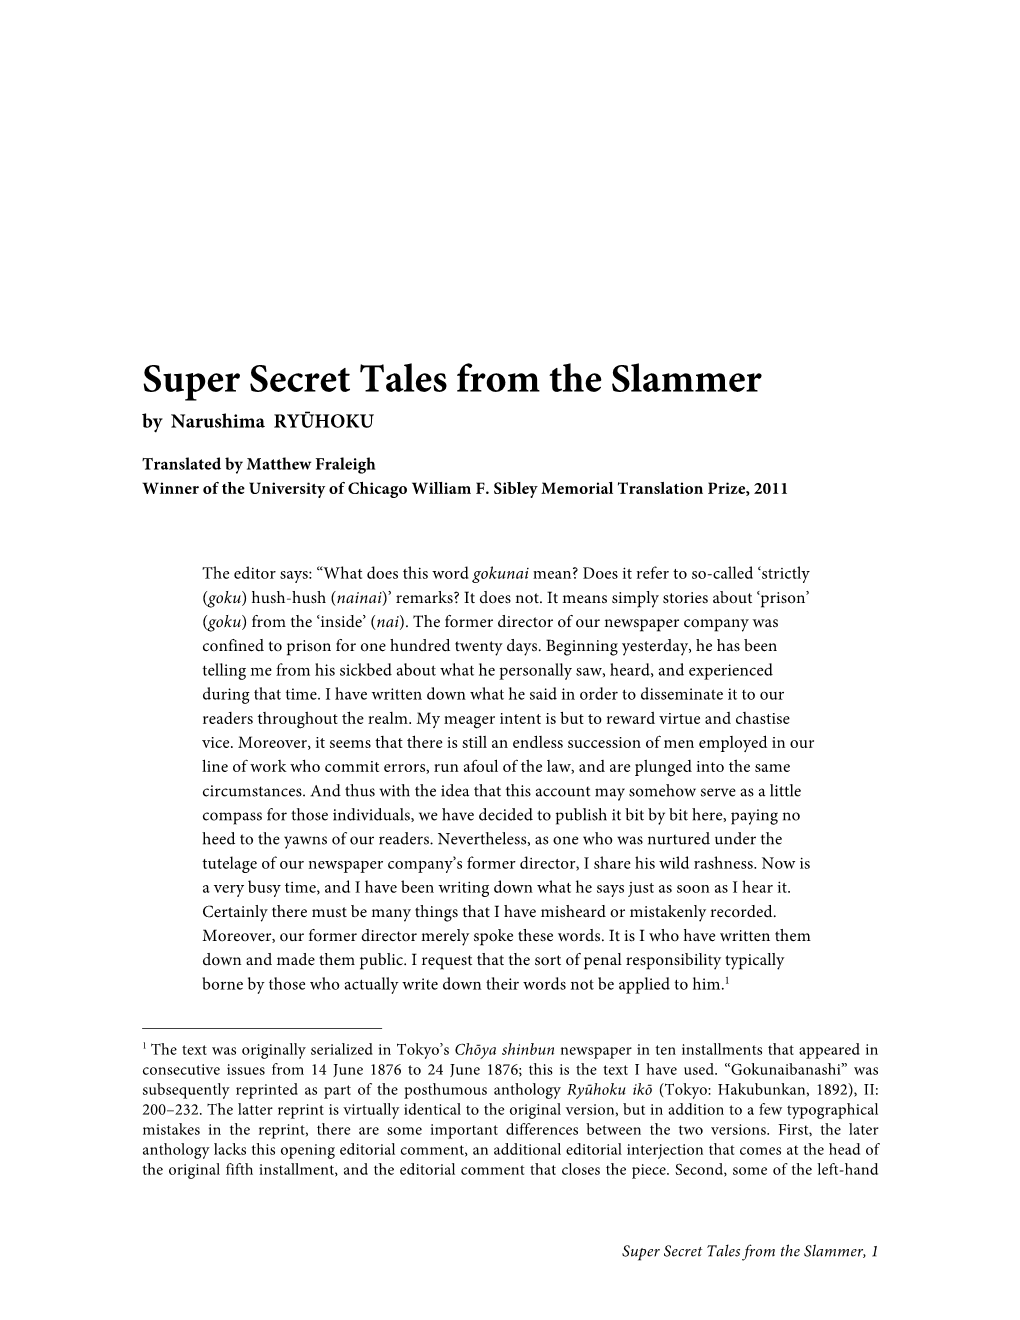 Super Secret Tales from the Slammer (Gokunaibanashi)